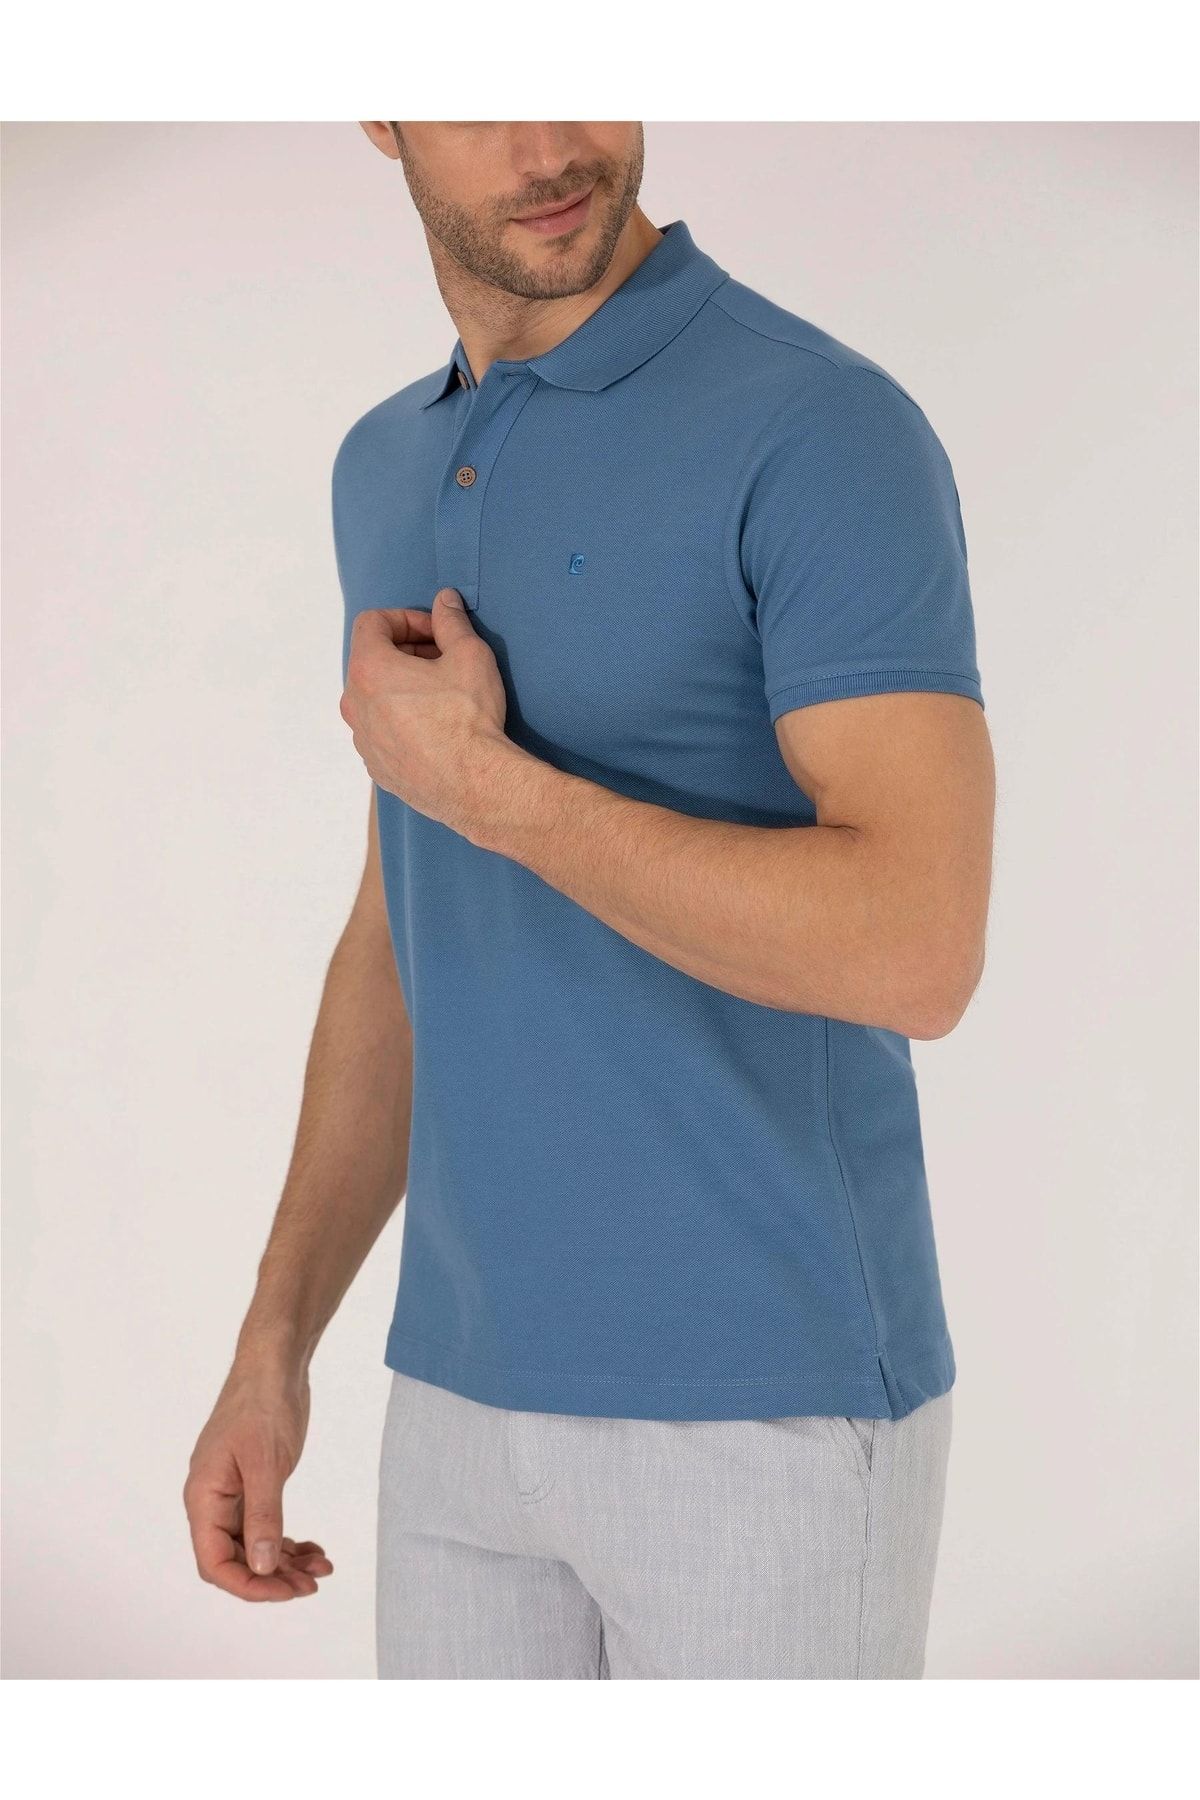 Pierre Cardin تی شرت پایه یقه پولو با تناسب معمولی آبی تیره